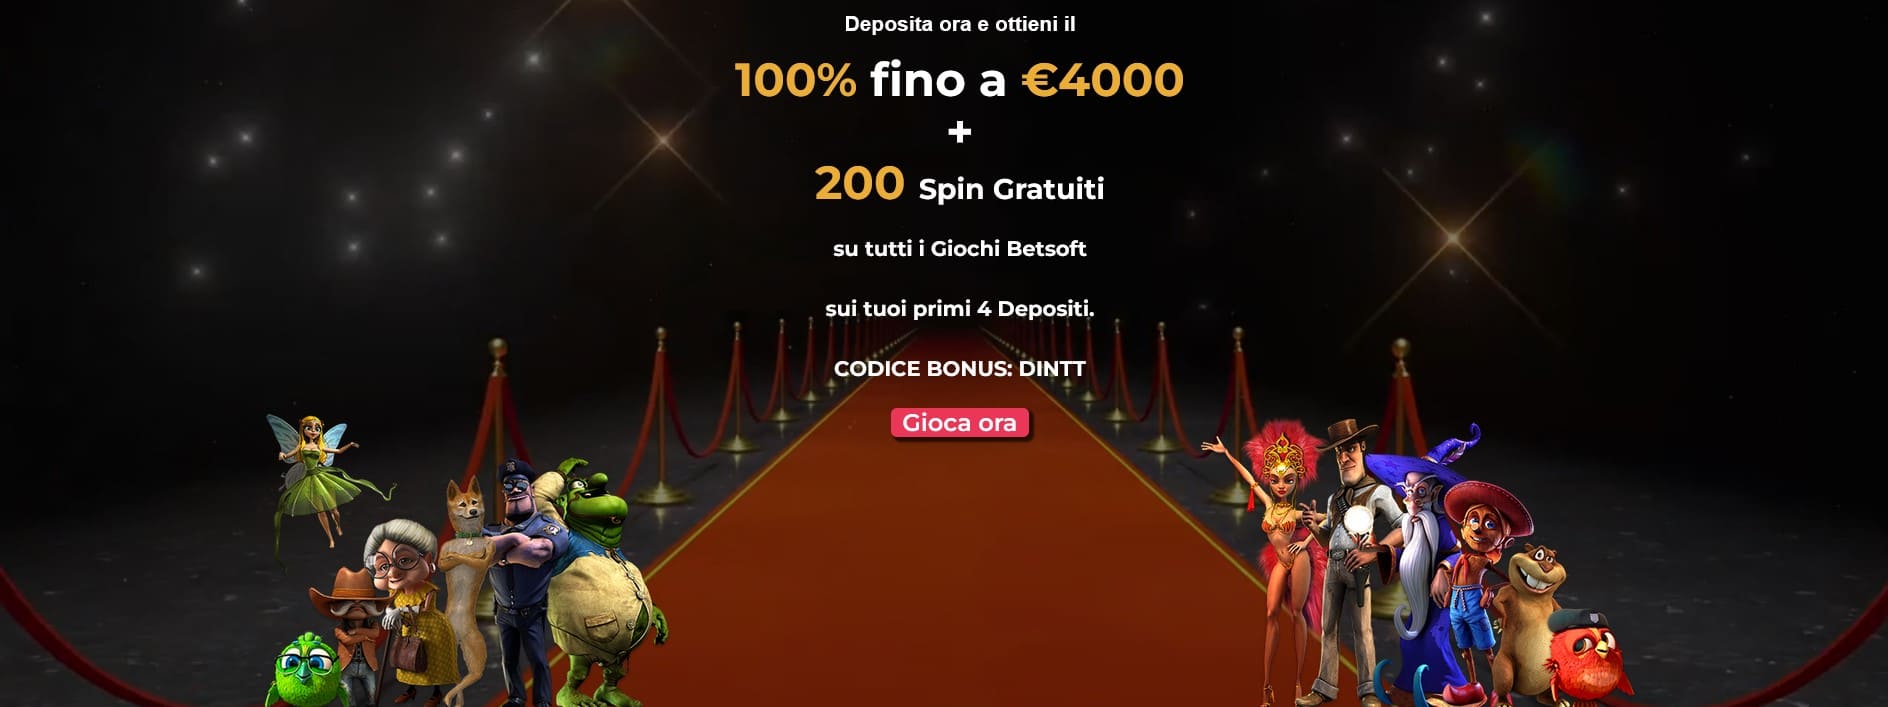 dingo online casino svizzera